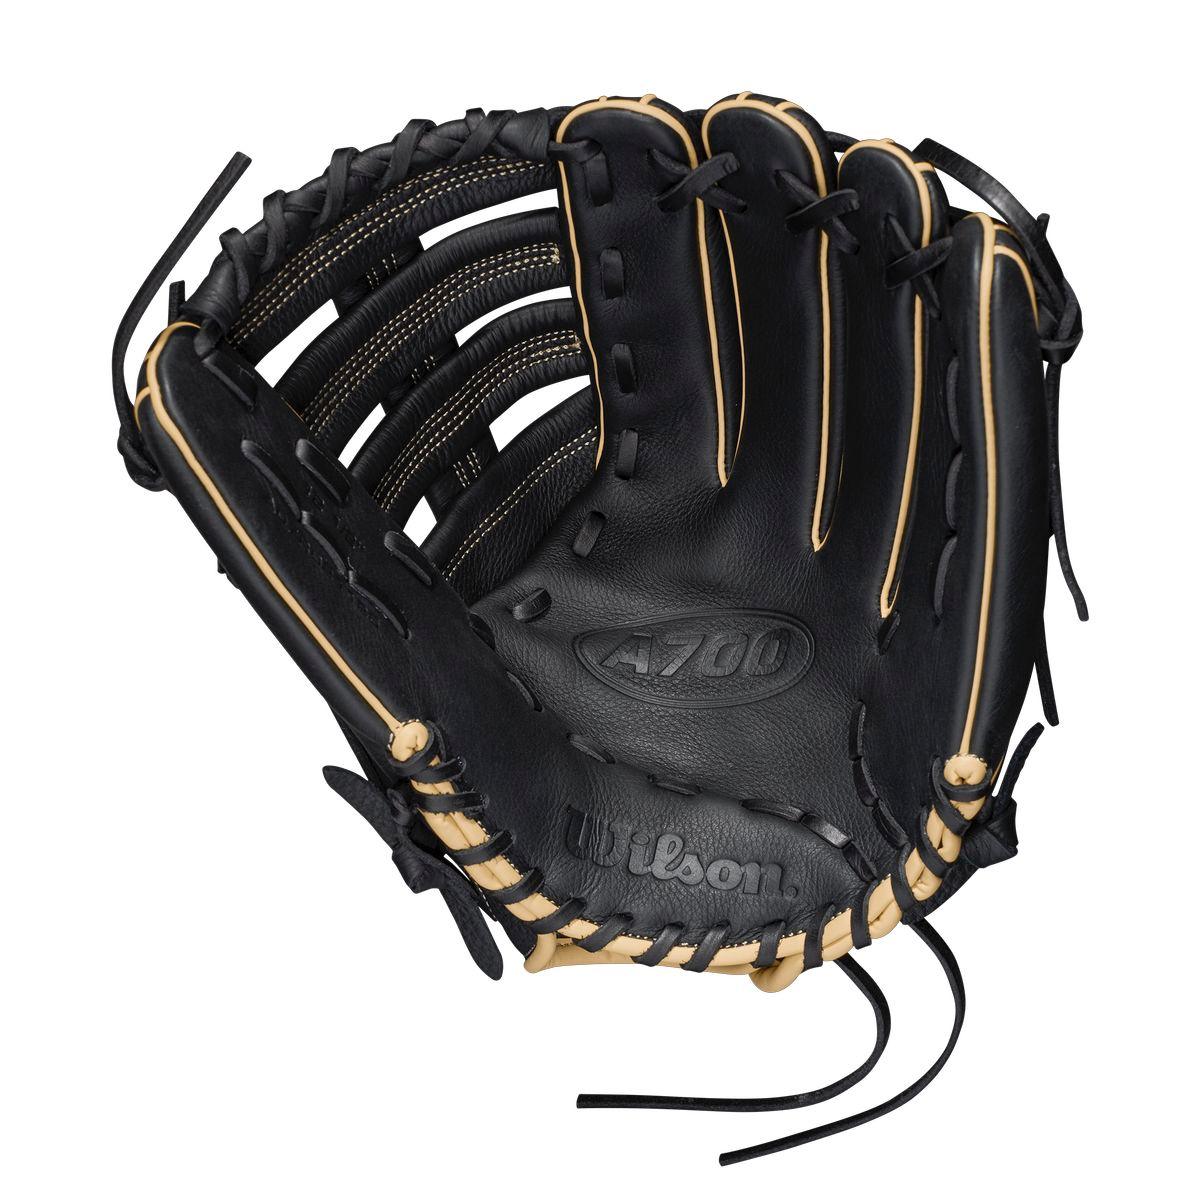 A700 12.5" Senior Baseball Glove - Sports Excellence